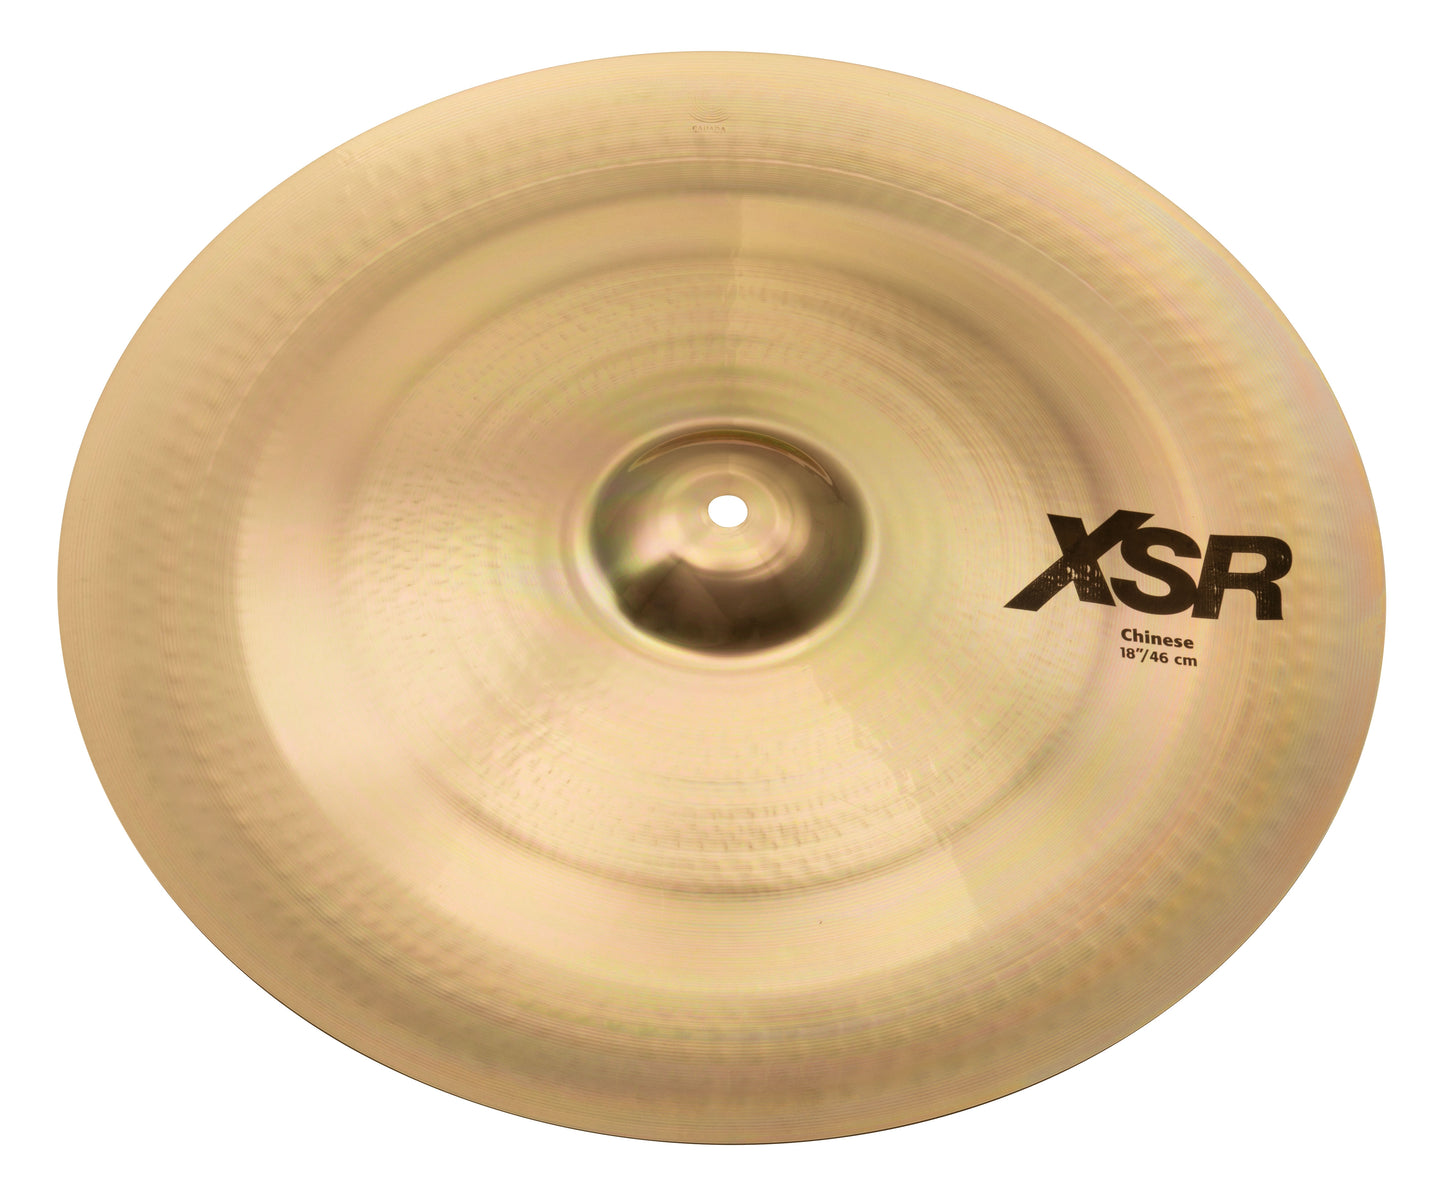 Sabian XSR China Cymbal, 18 Inch